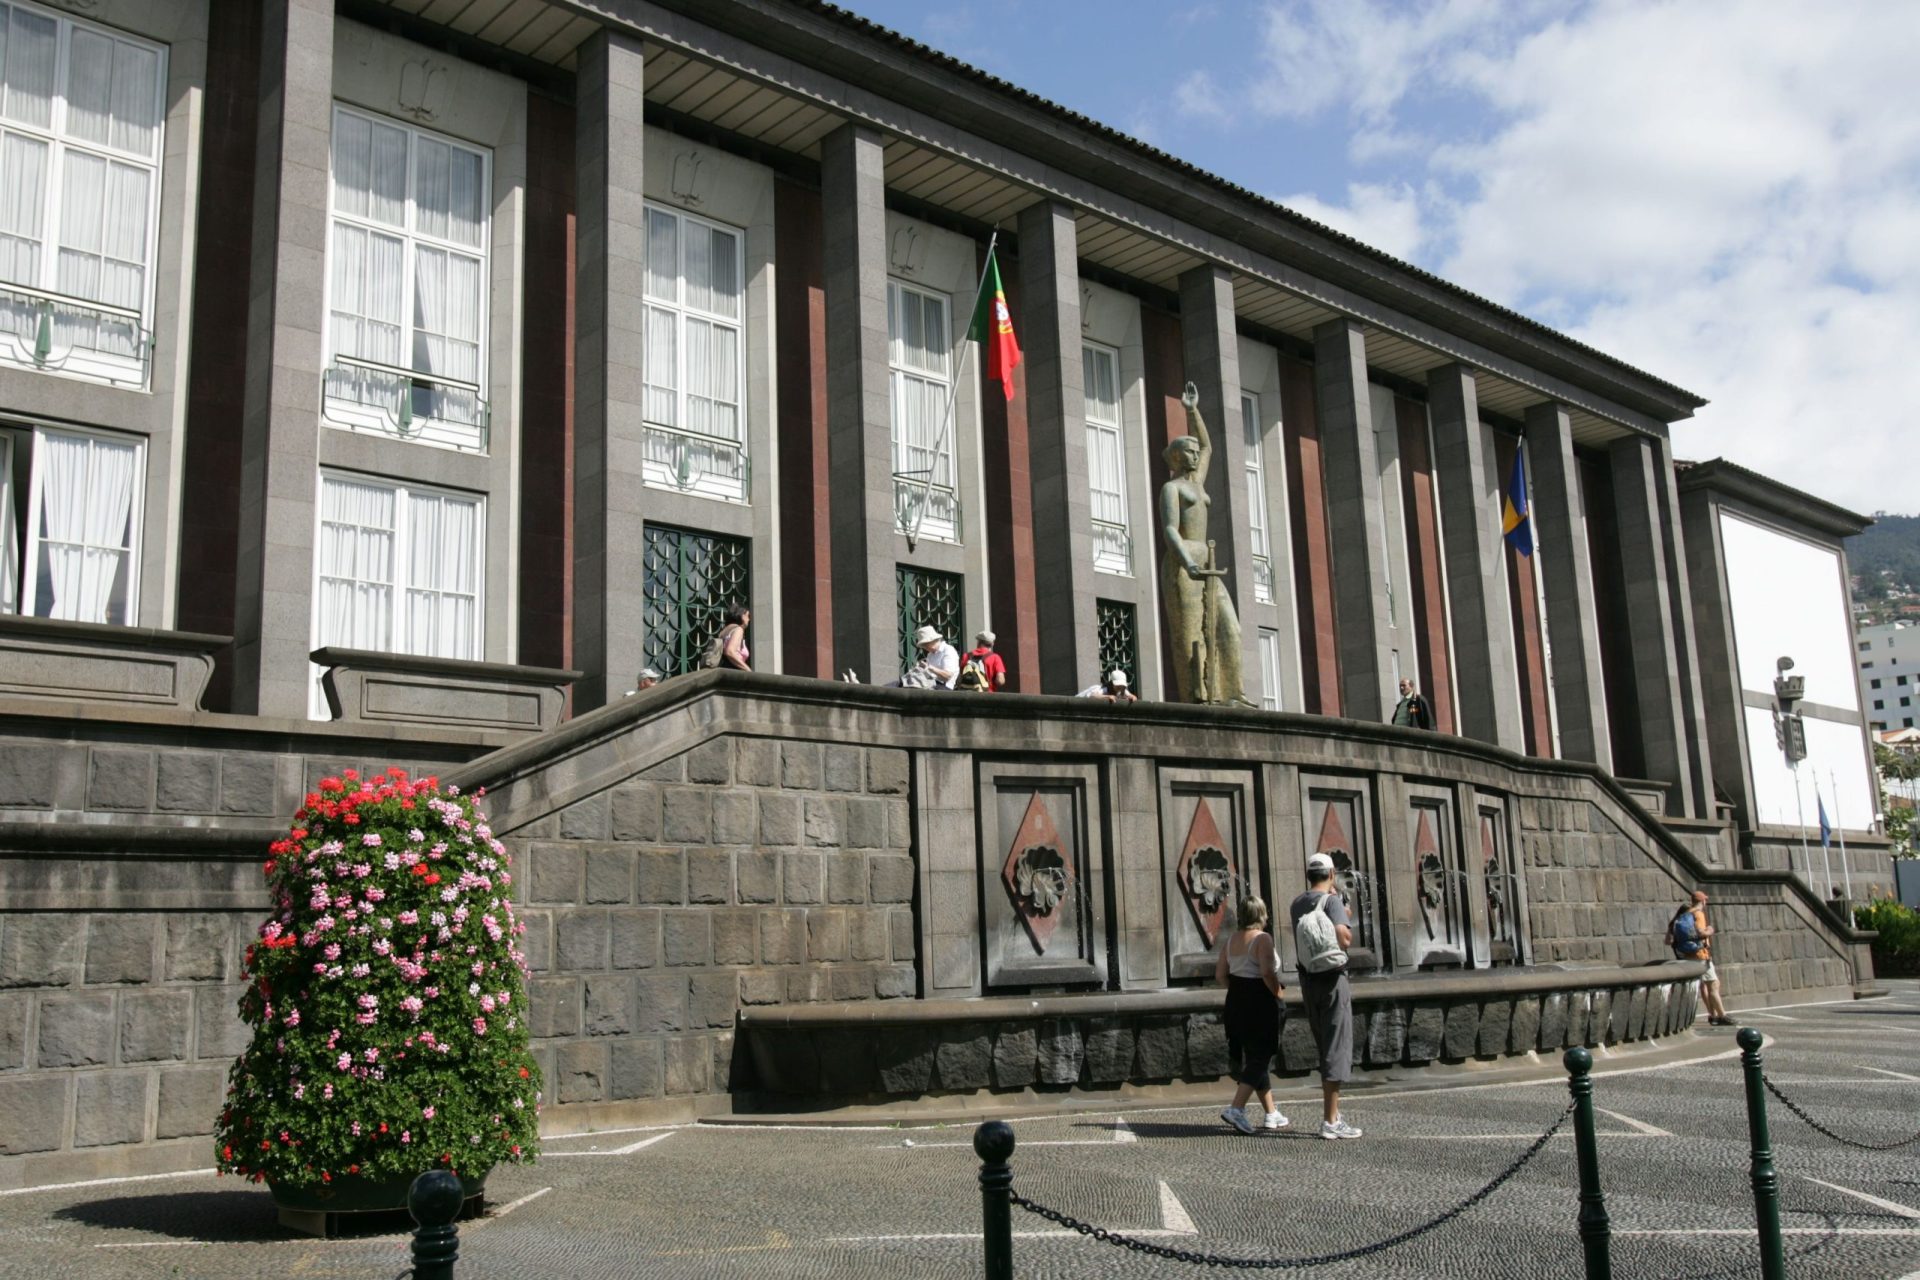 Ameaça de bomba no Tribunal do Funchal